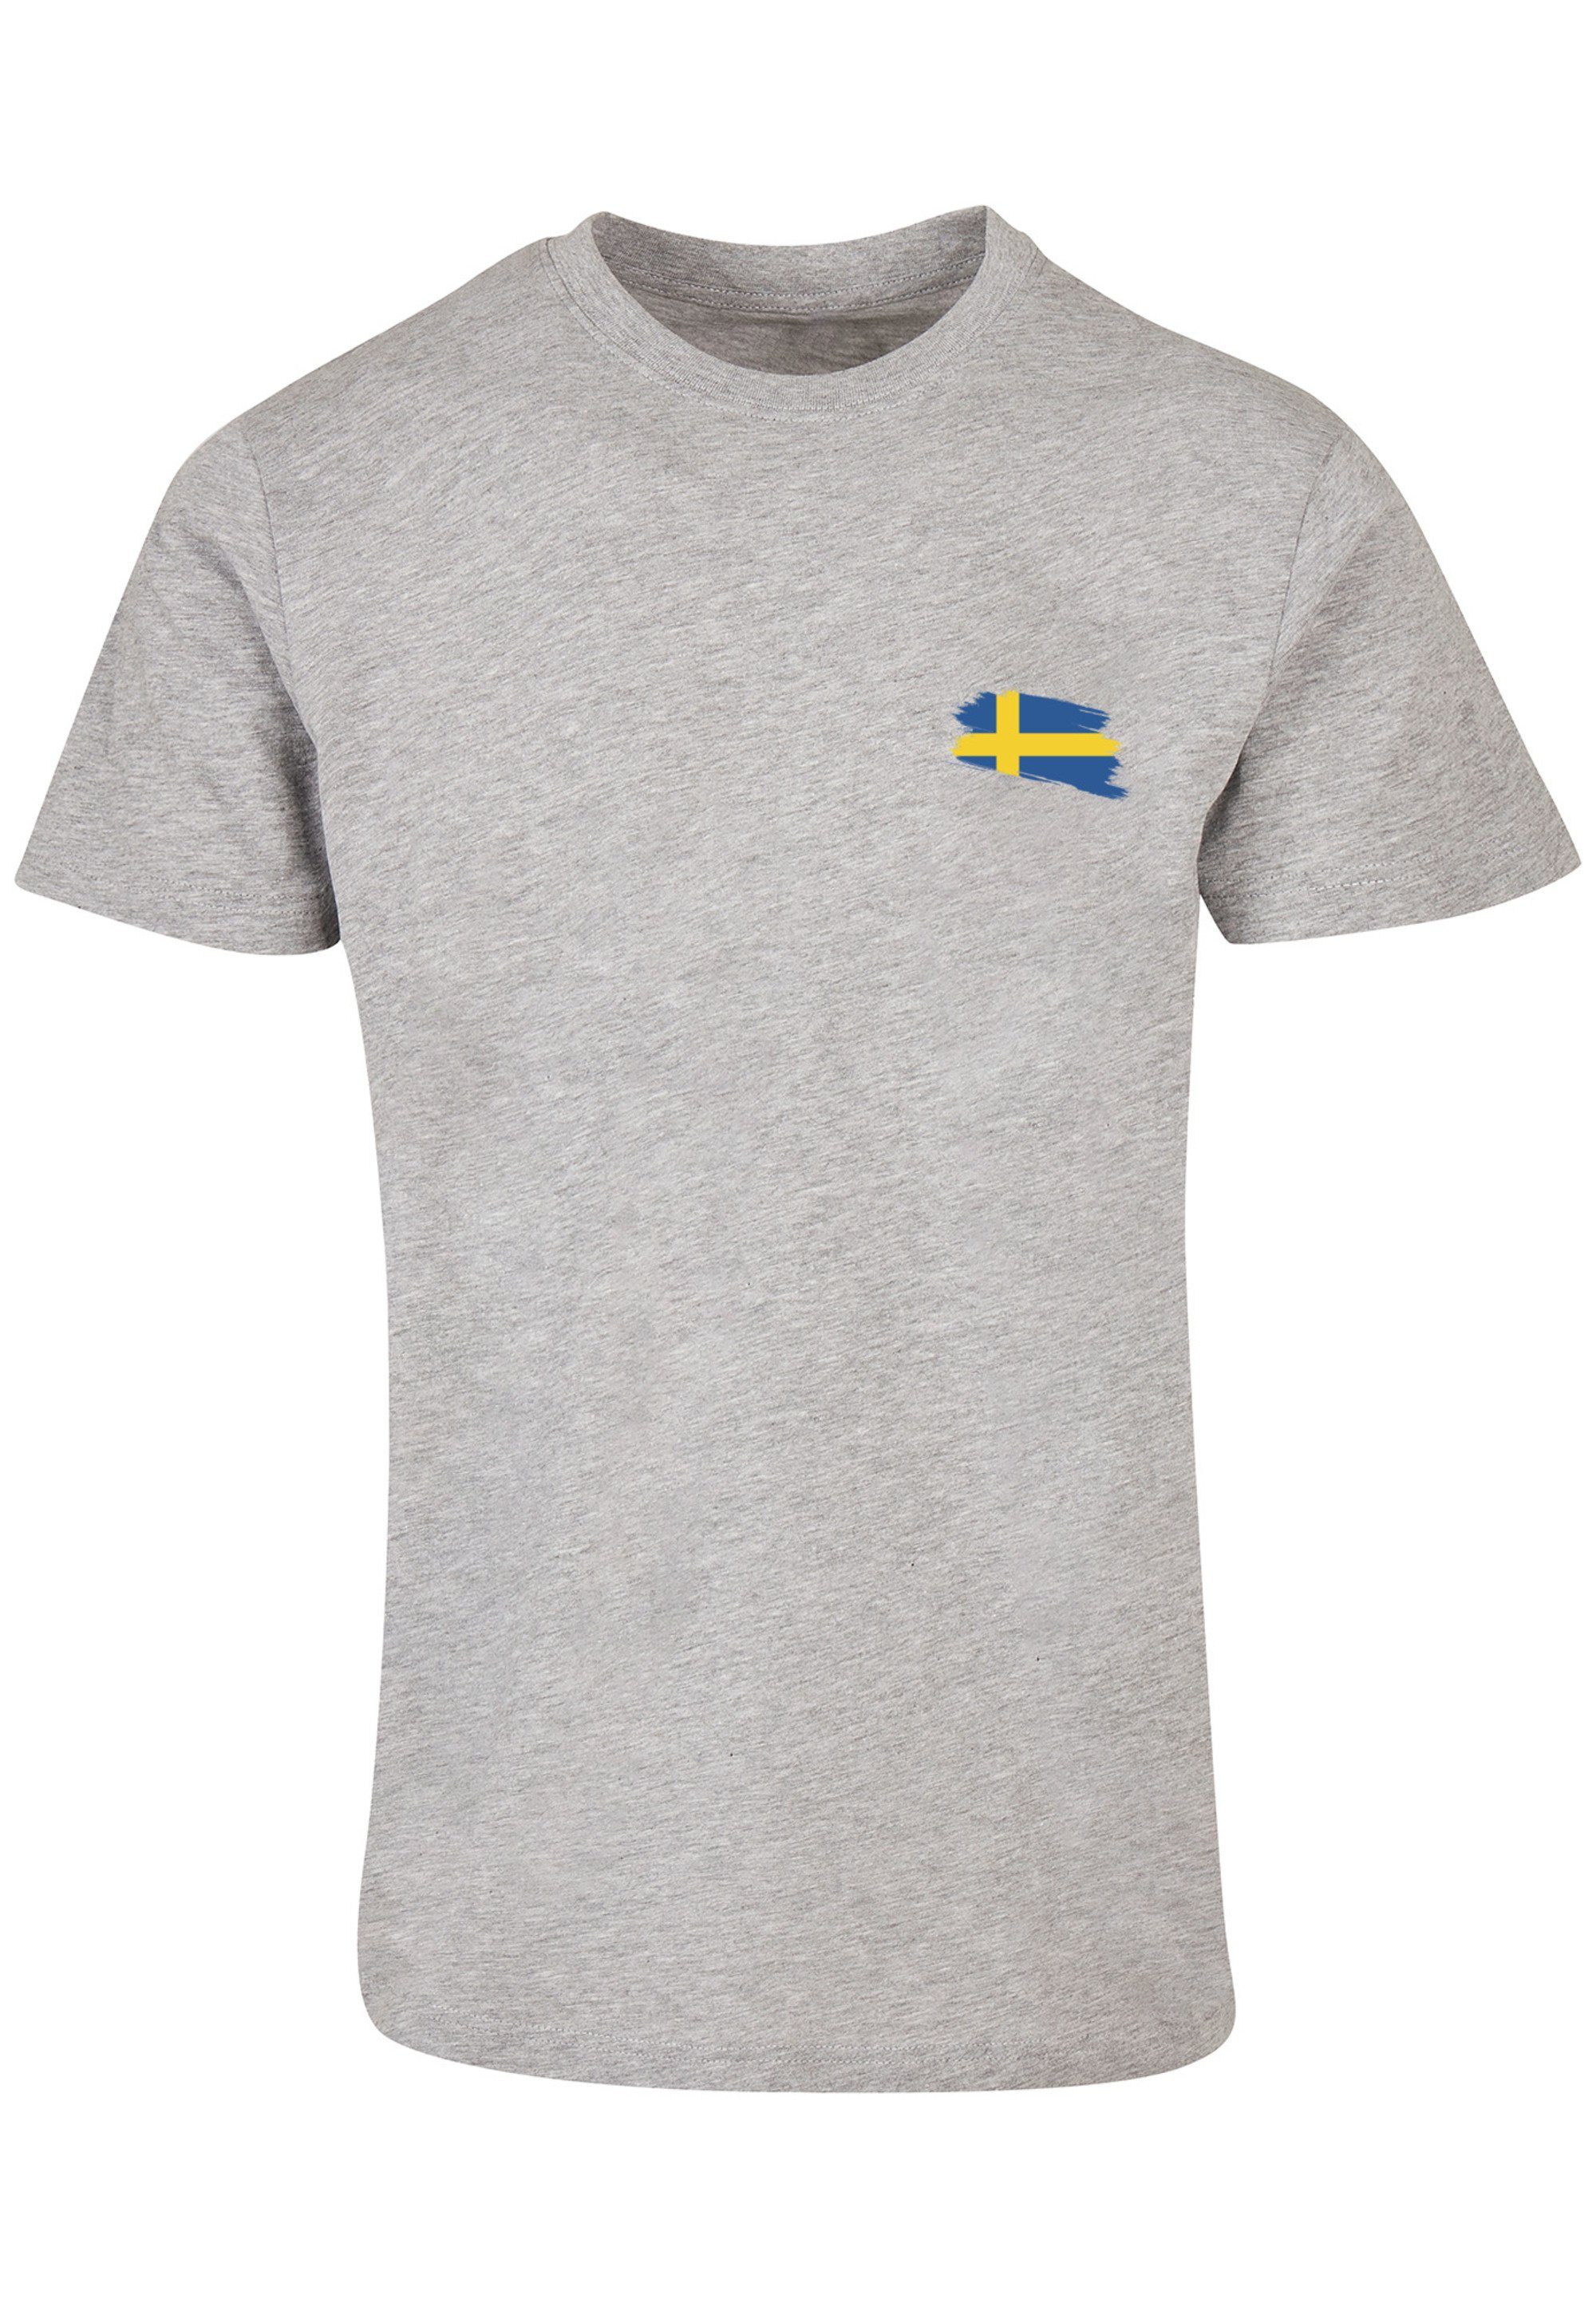 F4NT4STIC Schweden T-Shirt grey Print Flagge heather Sweden